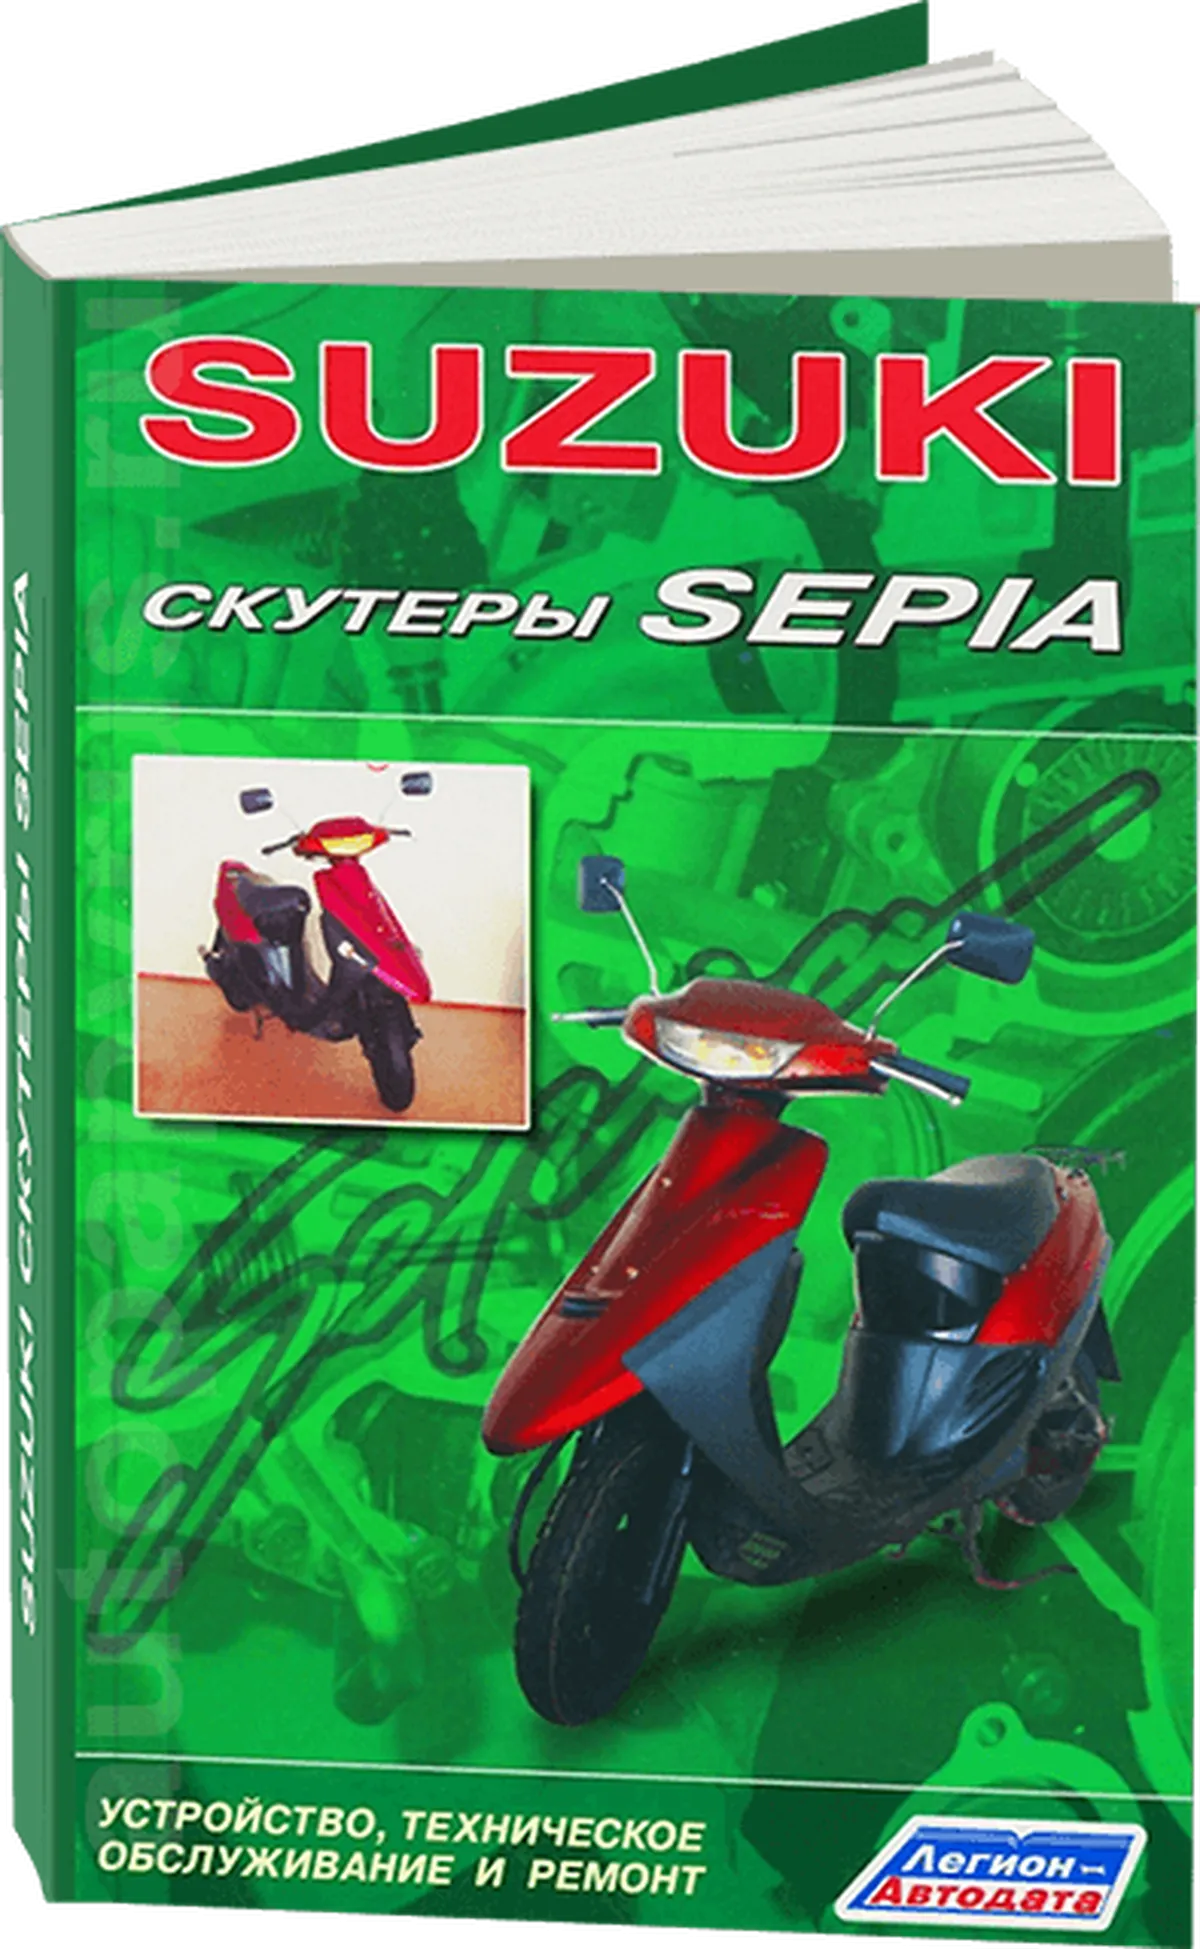 Книга: Скутеры SUZUKI SEPIA рем., экспл., то | Легион-Aвтодата